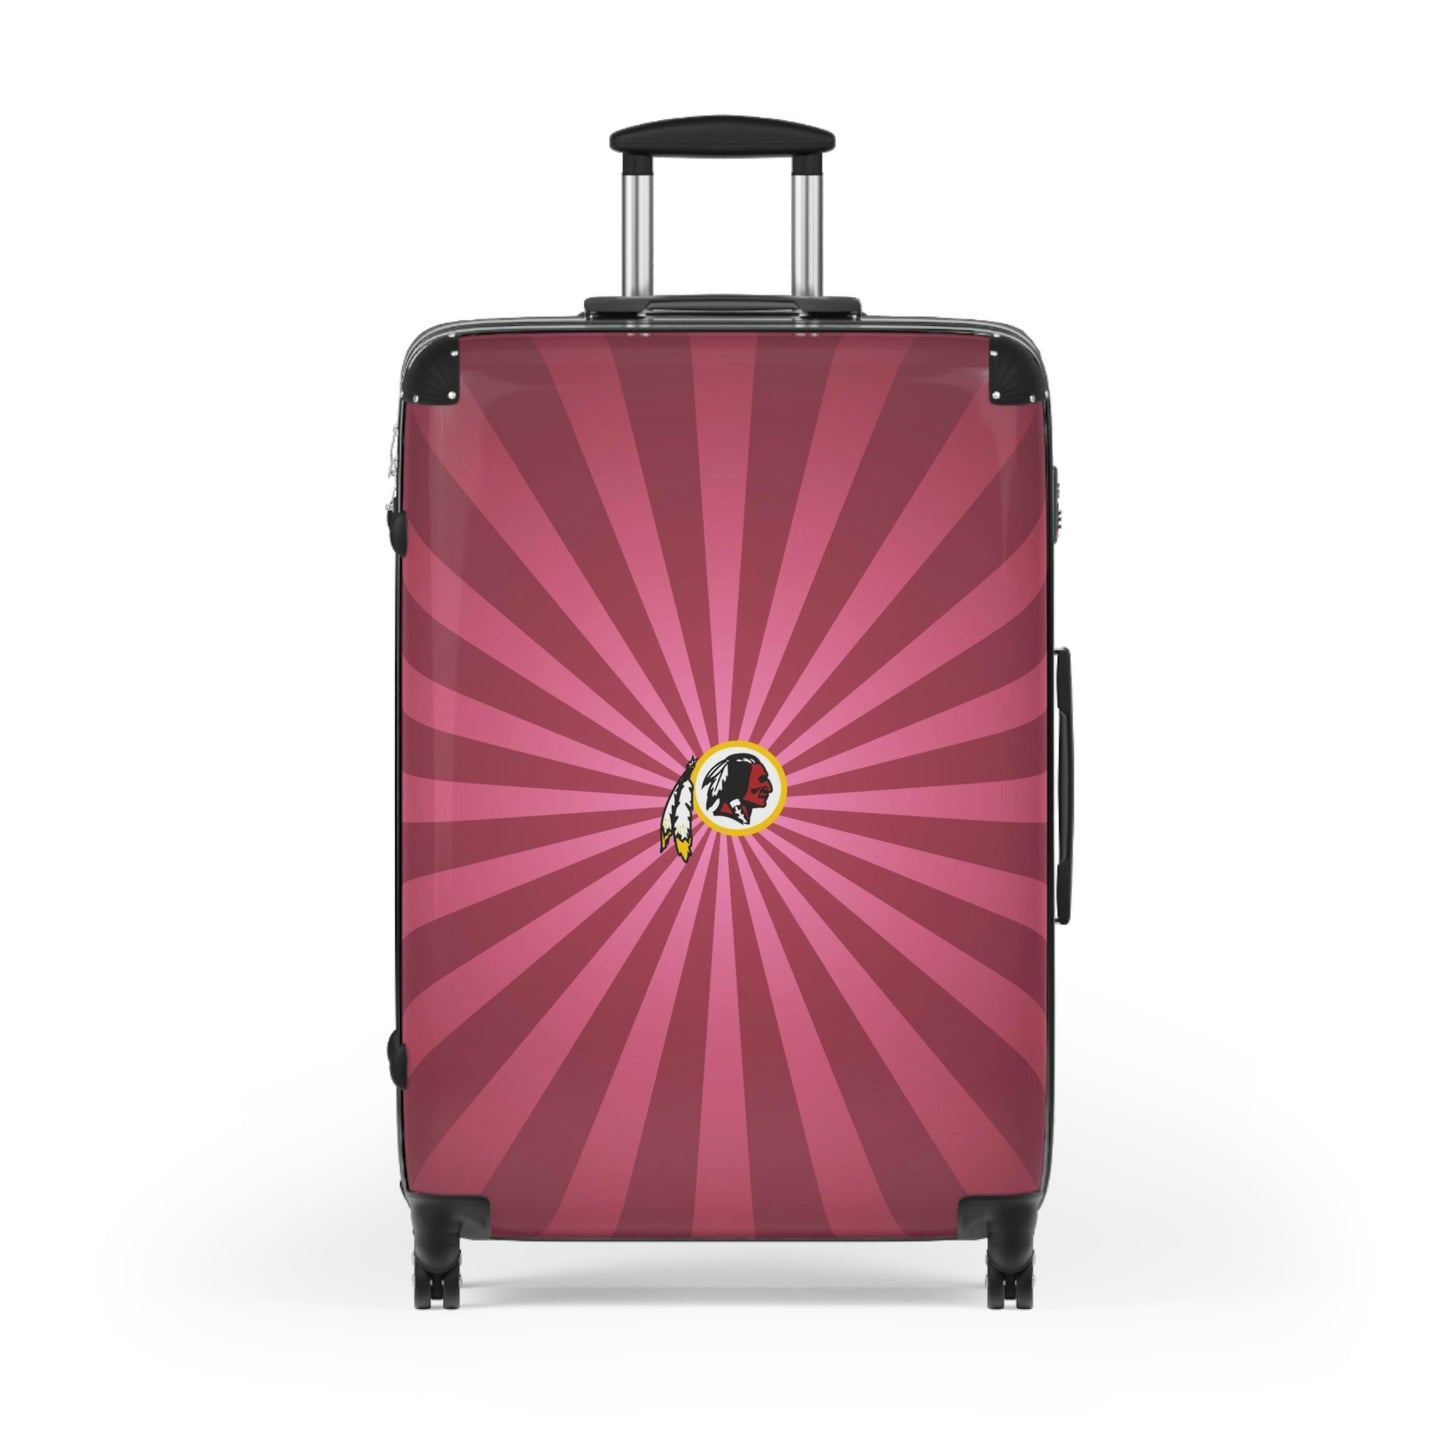 Geotrott Washington Redskins National Football League NFL Team Logo Cabin Suitcase Rolling Luggage Checking Bag